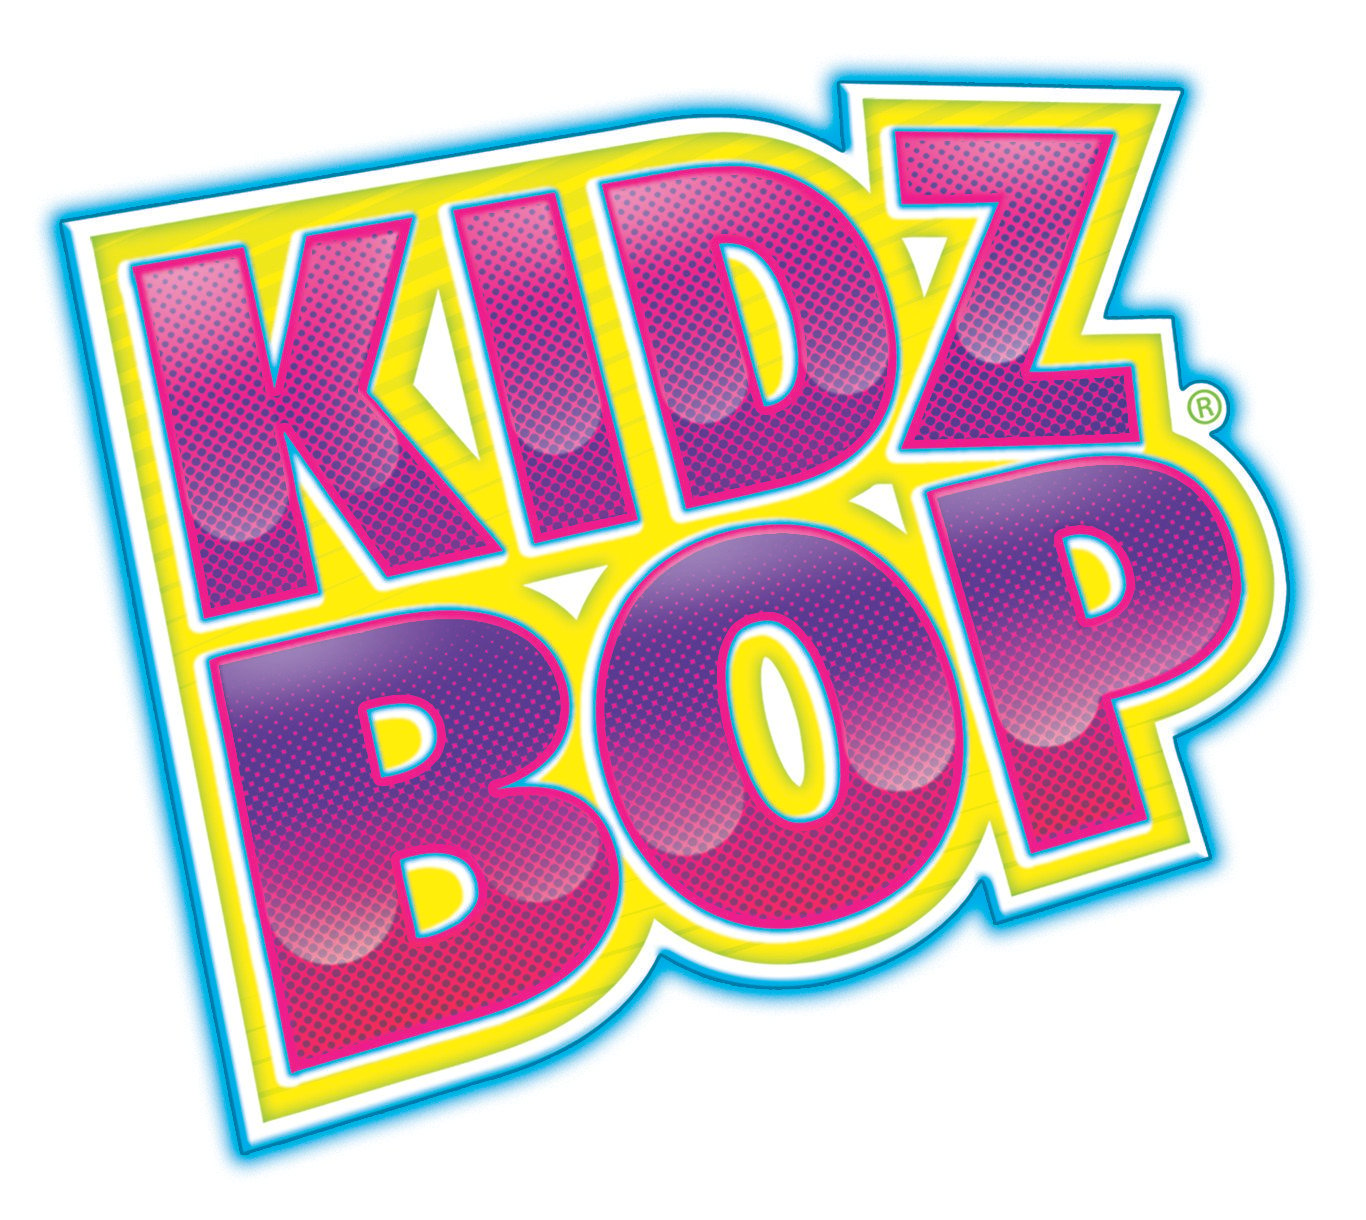 Kidz Bop Apps Logo - Kidz Bop and Spotify Create New Musical App Kidz Bop Boombox